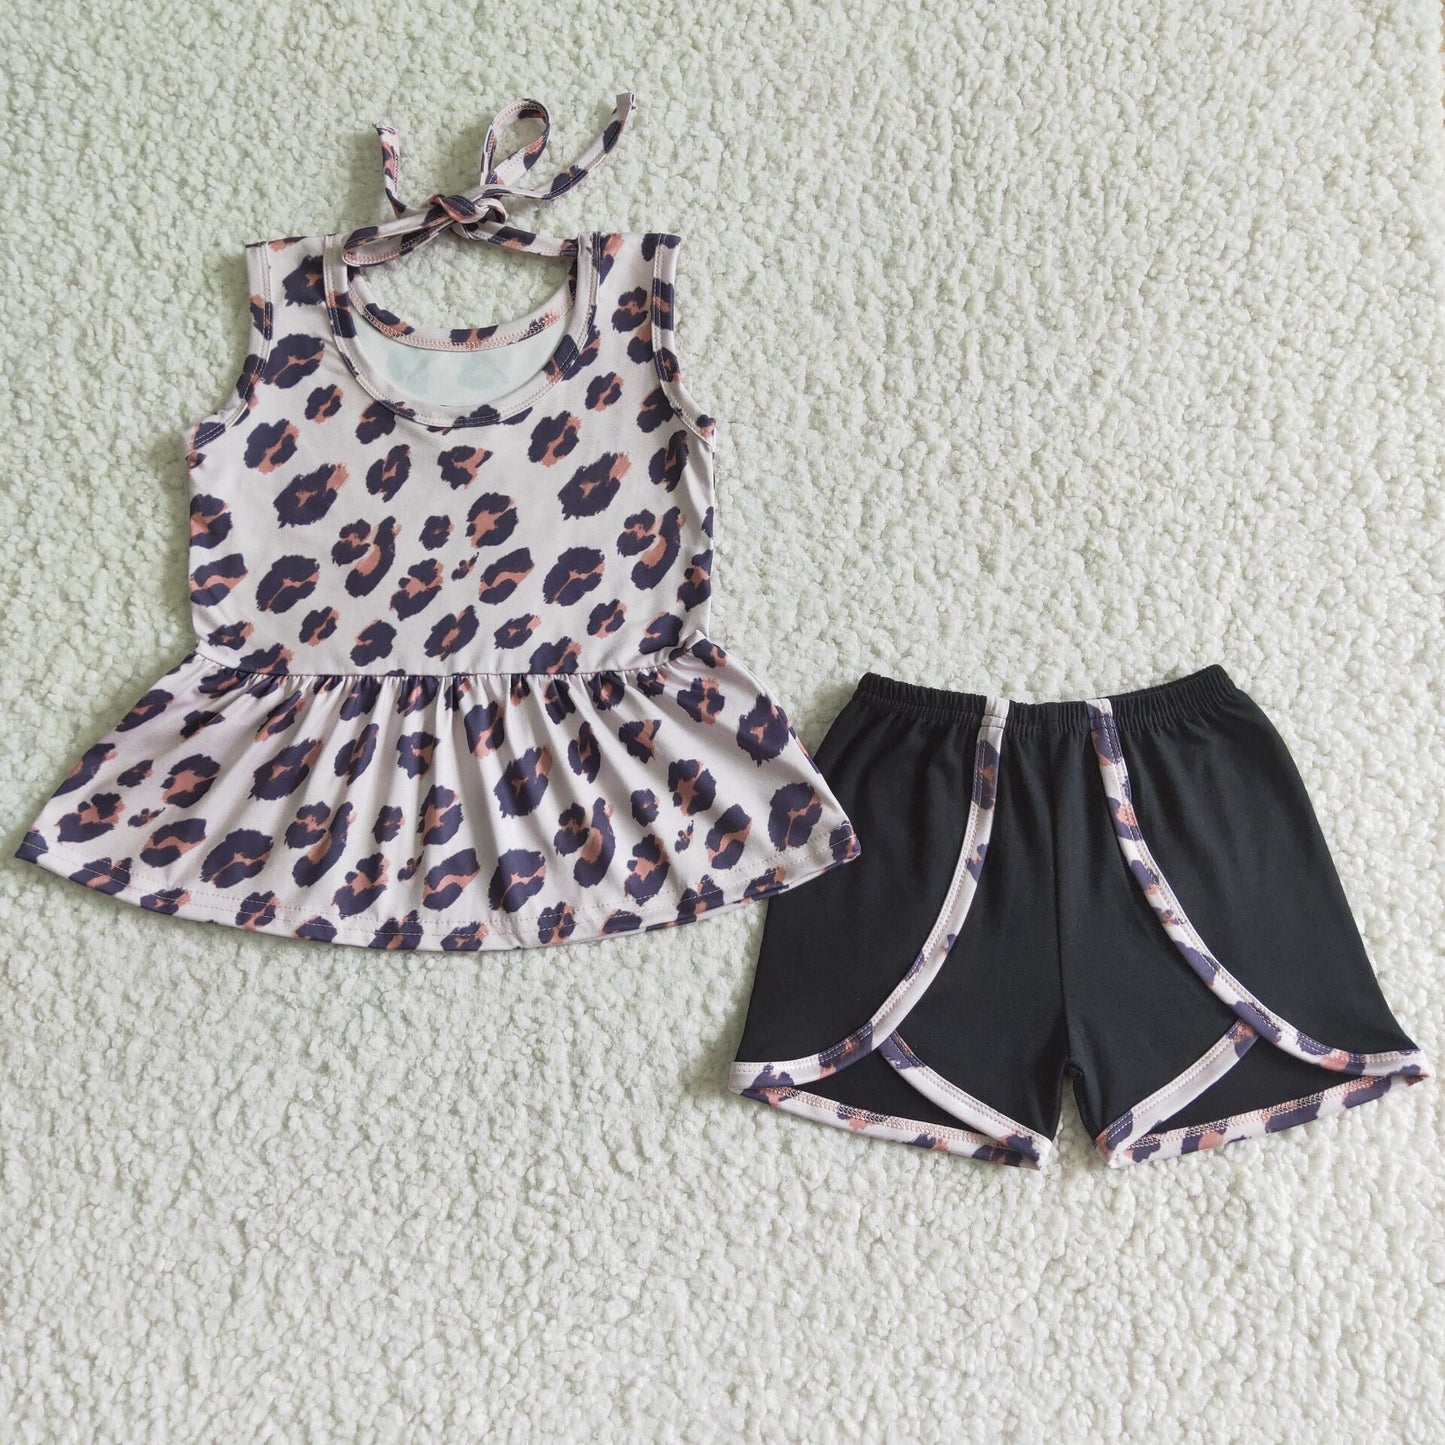 rts no moq GSSO0052 Girls Sleeveless Leopard Black Shorts Set